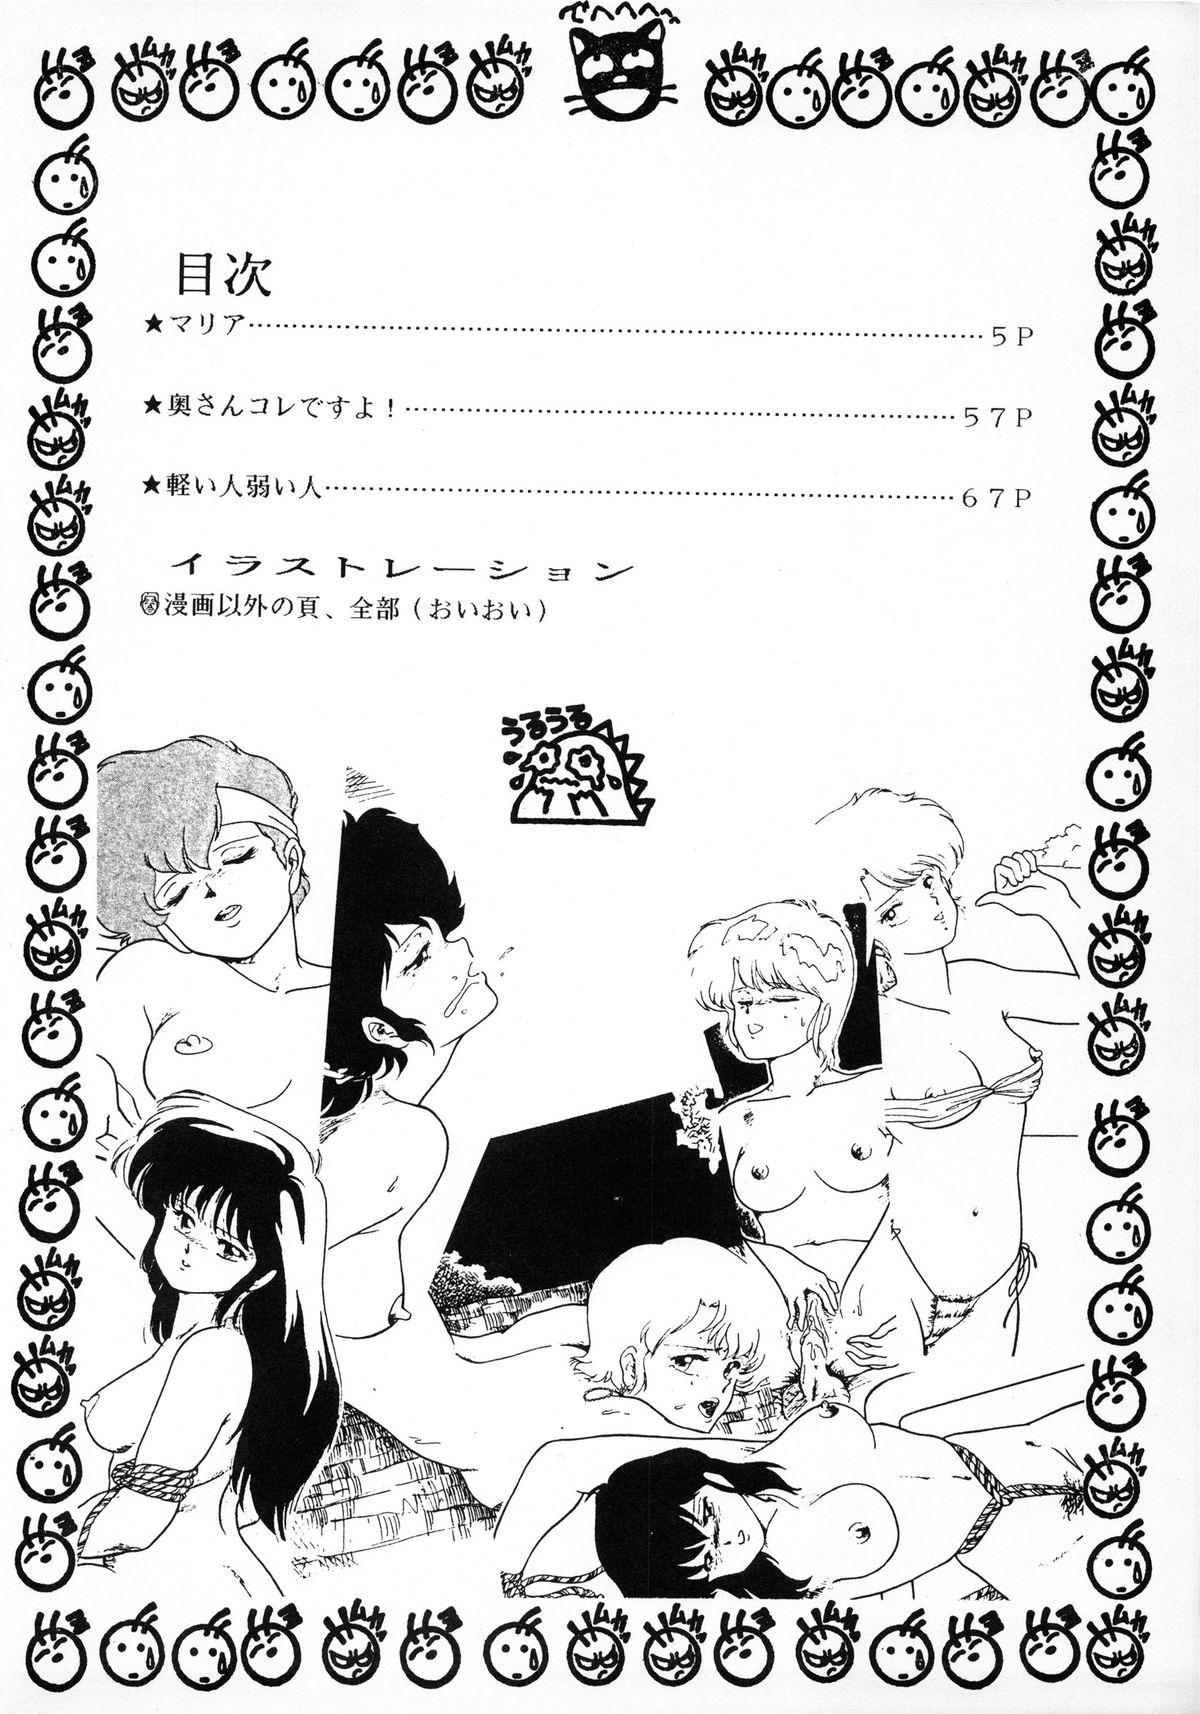 Sucking Dick DOG FIGHT COLLECTION - Urusei yatsura Maison ikkoku Kimagure orange road Femdom - Page 4